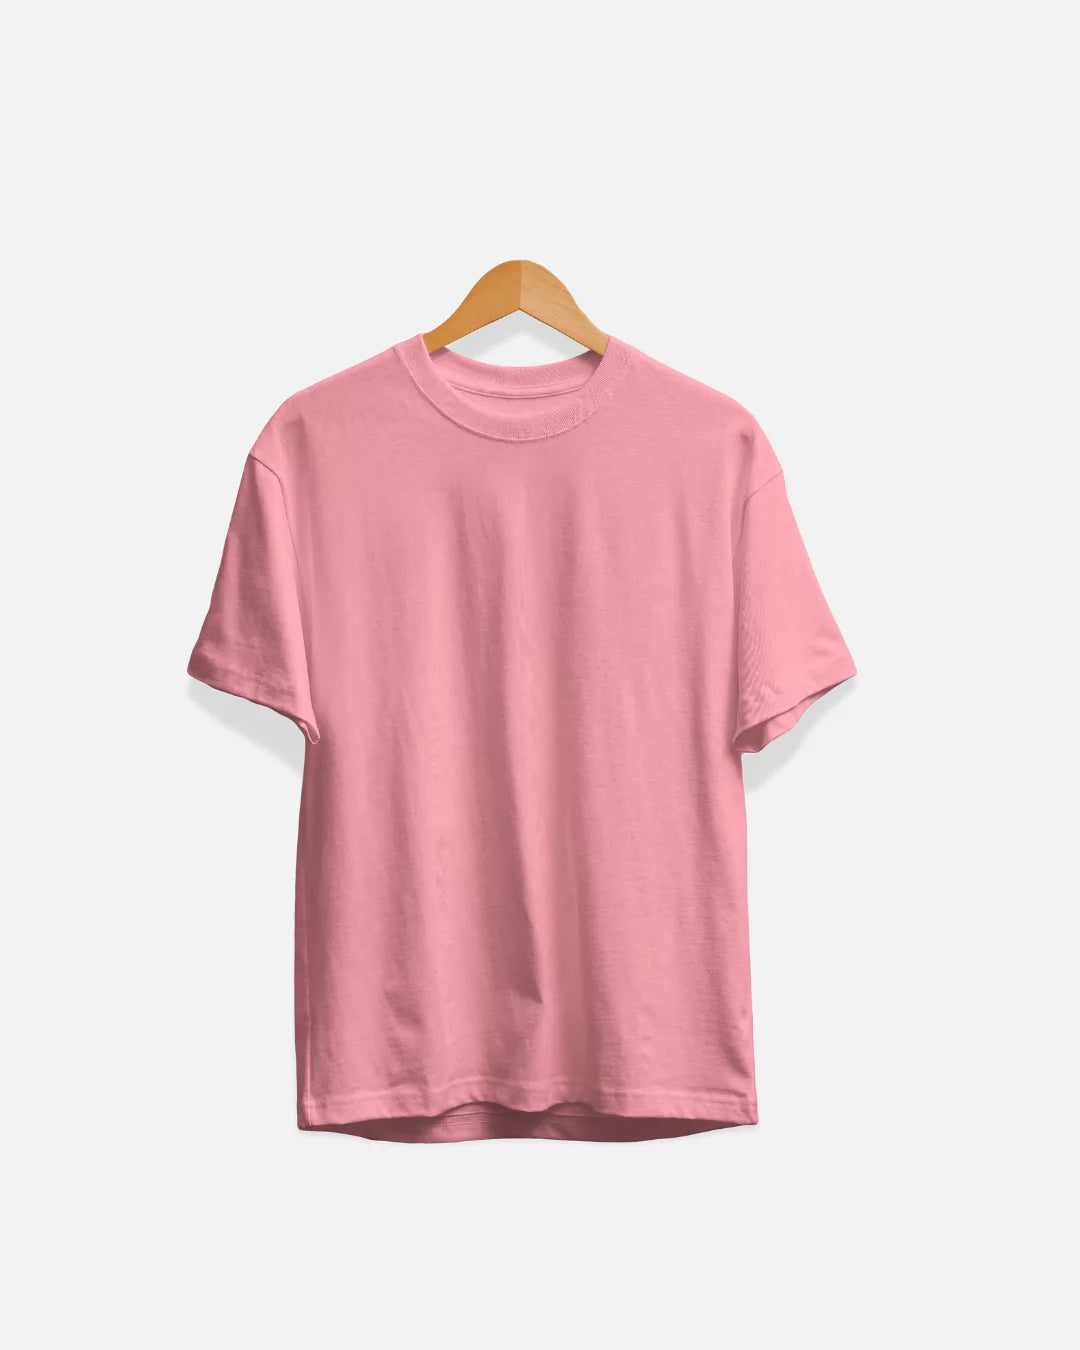 Salmon Pink Plain T-Shirt